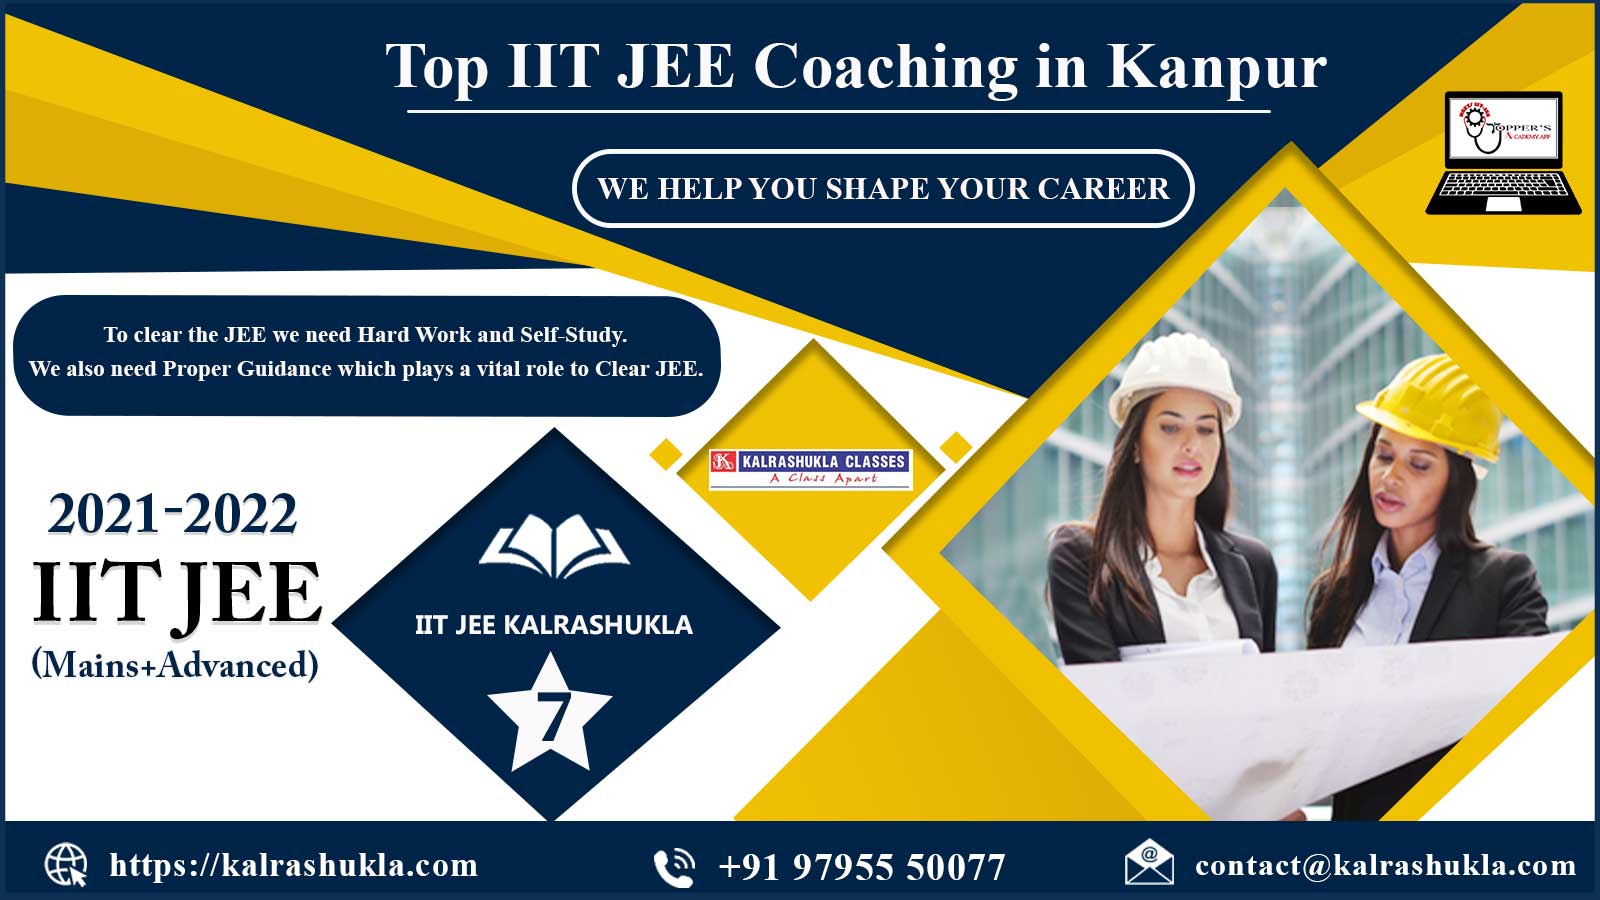 IIT JEE Kalrashukla Classes in Kanpur